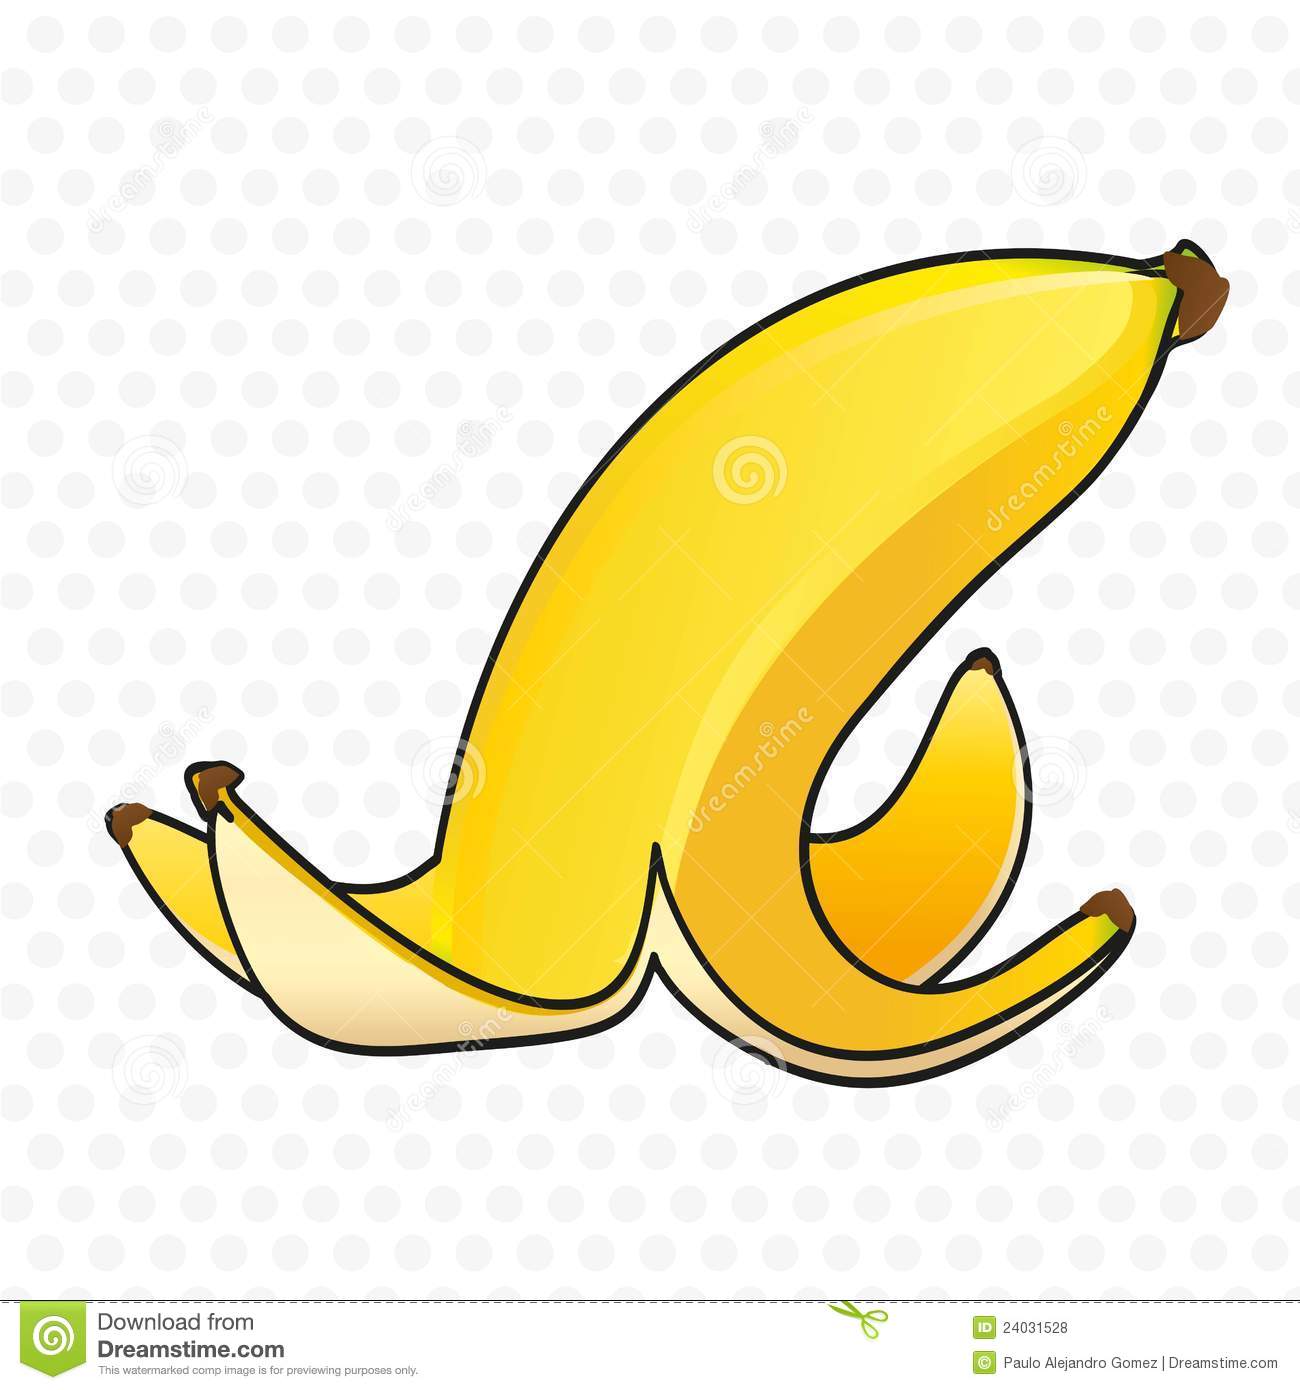 Banana peel clip art.